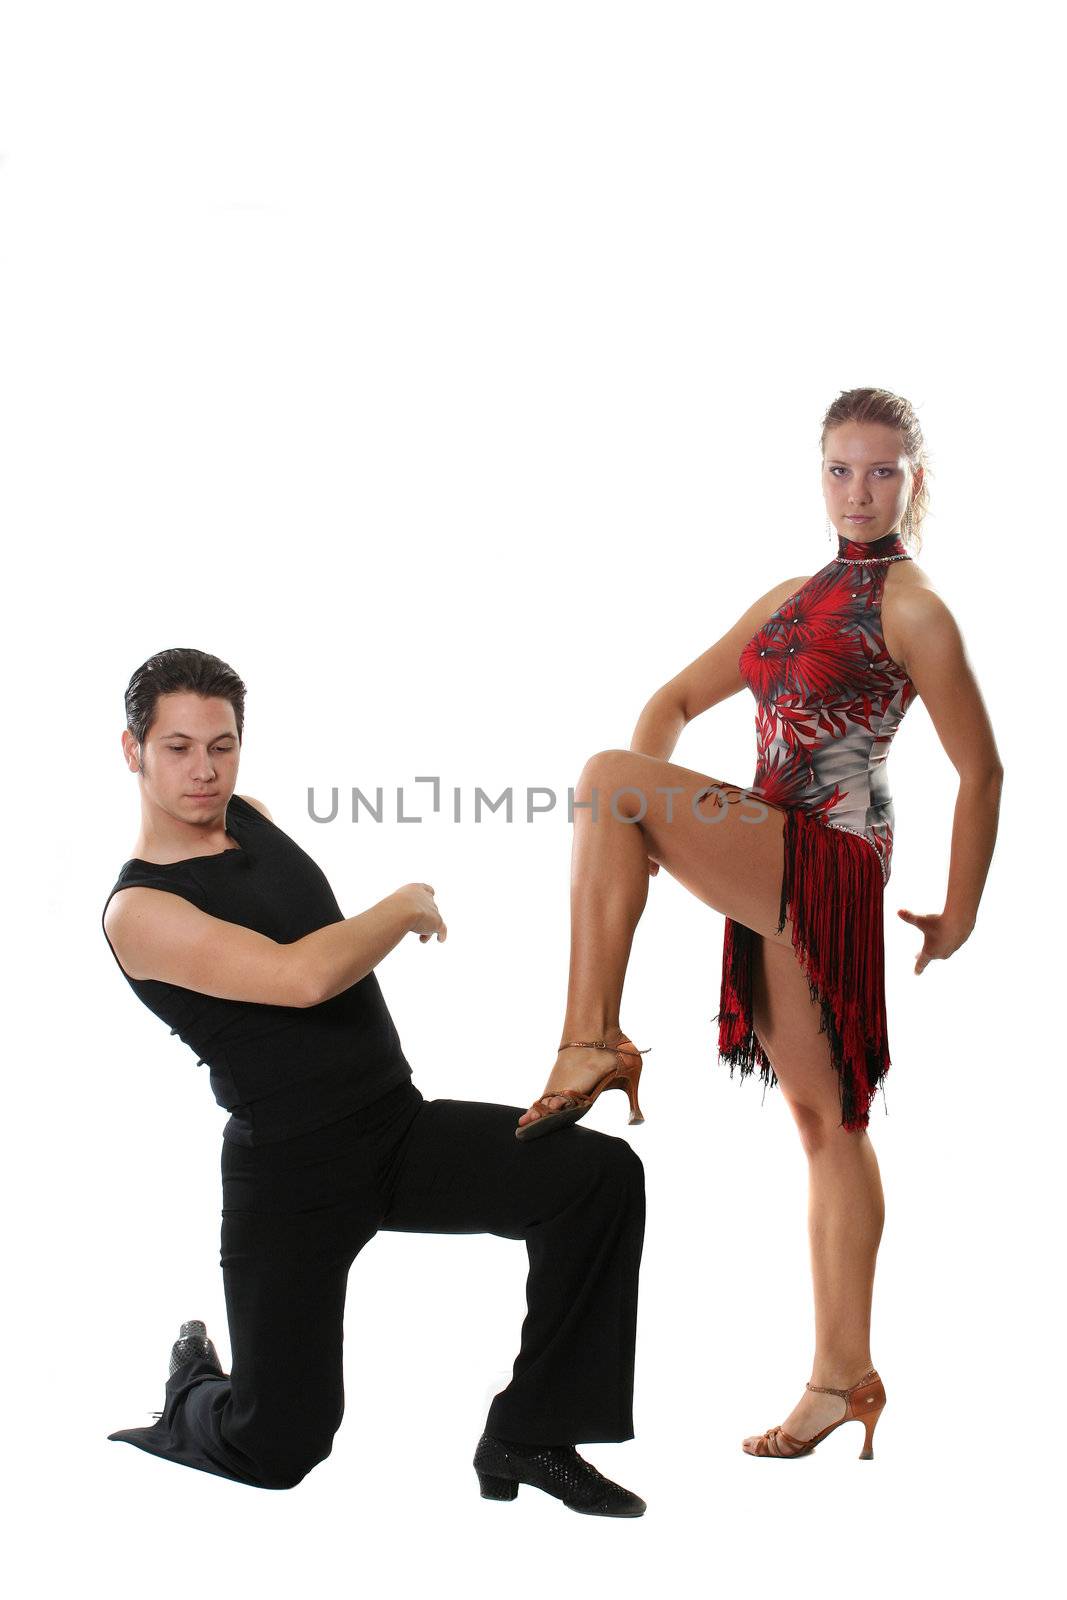 dancer dancing american latin couple beauty isolated